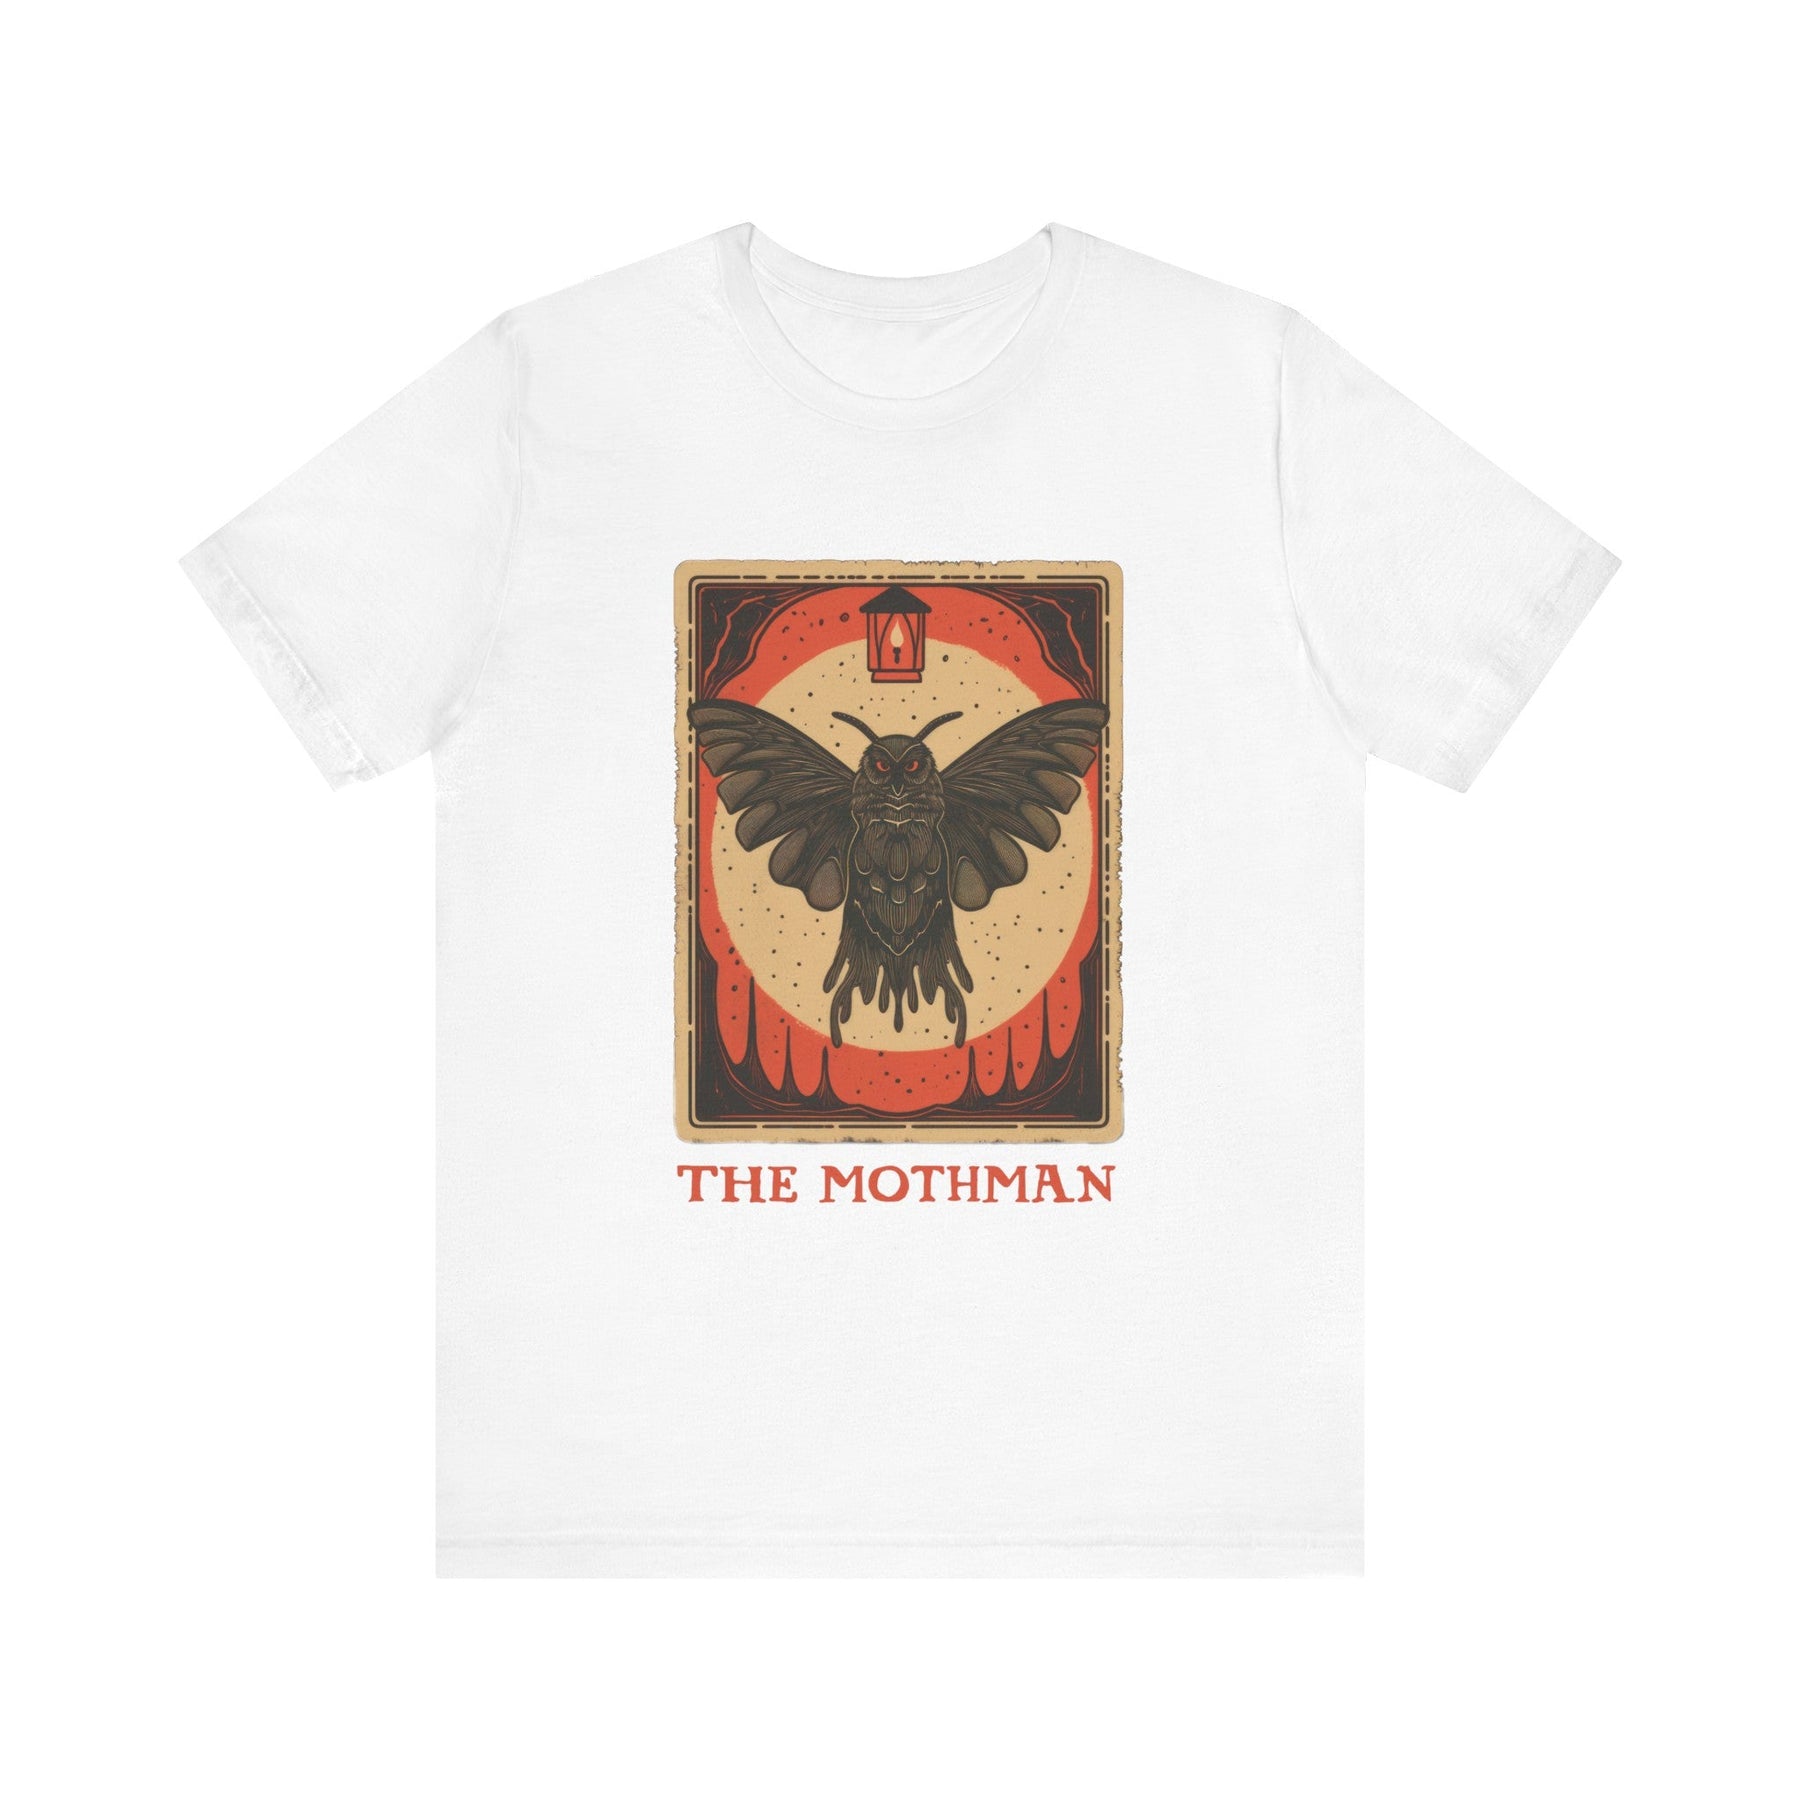 Mothman Tarot Card T - Shirt - Goth Cloth Co.T - Shirt18449921729417189476